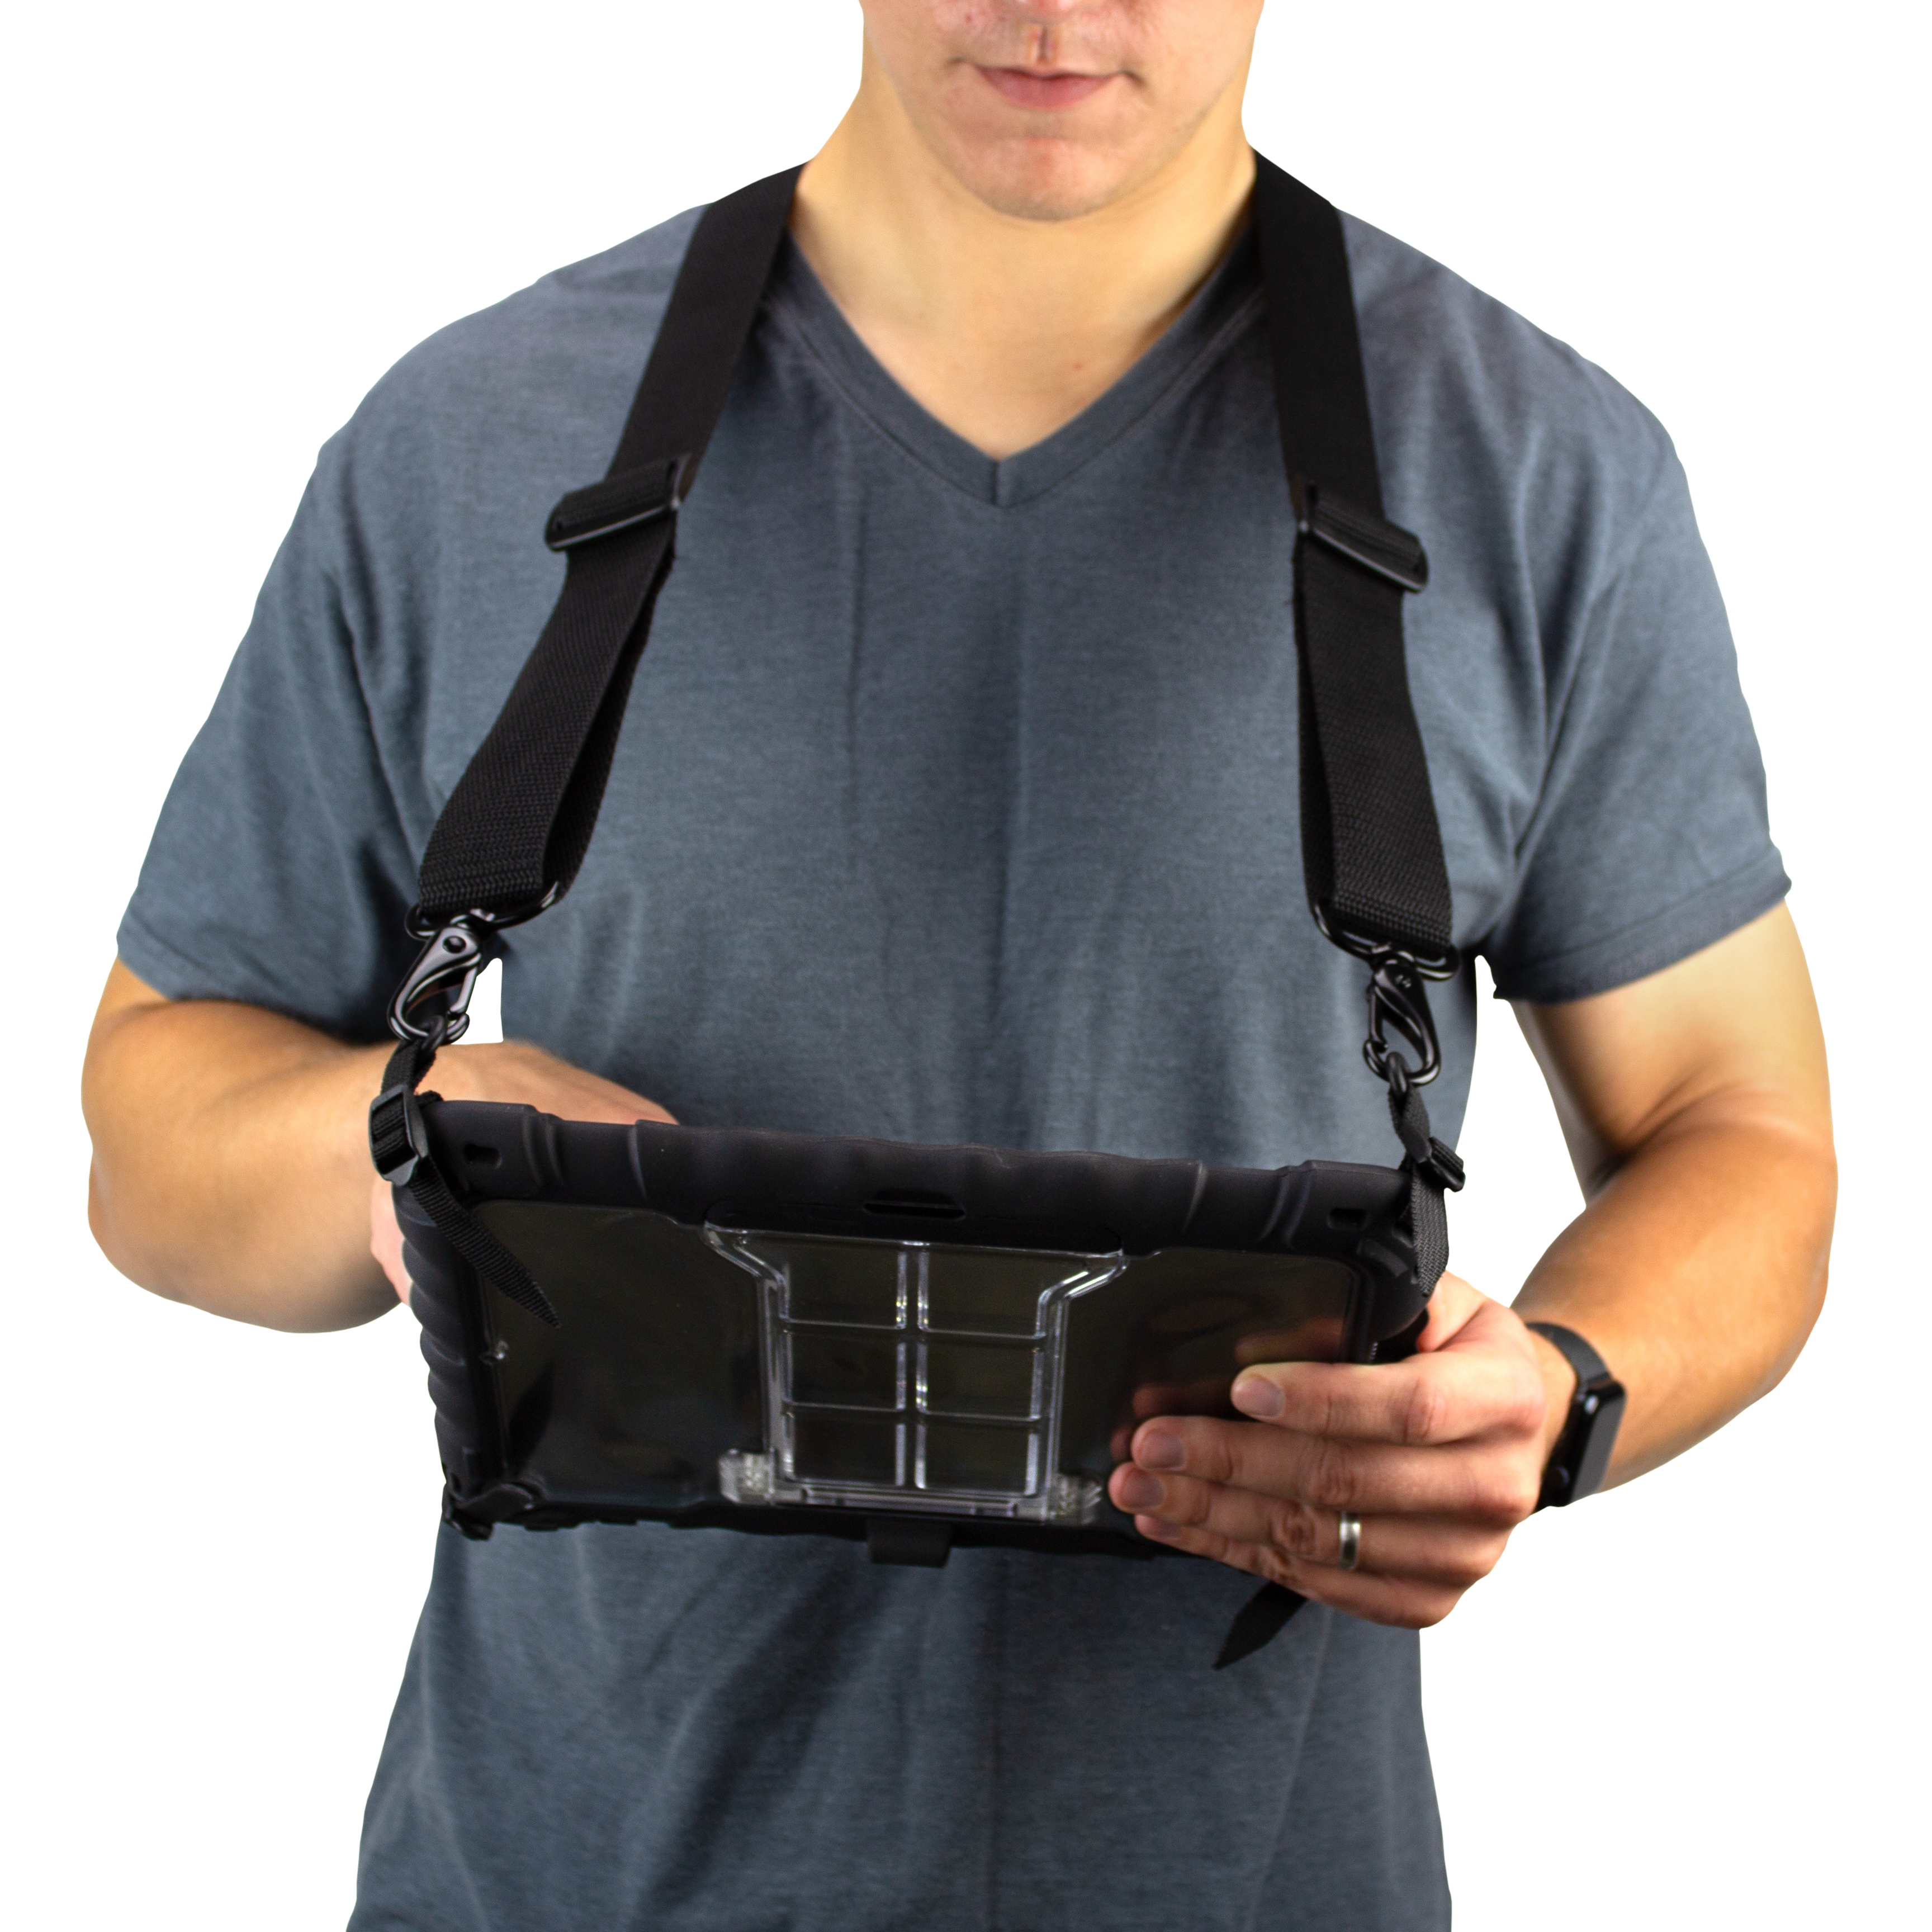 User Harness Kit for iPad